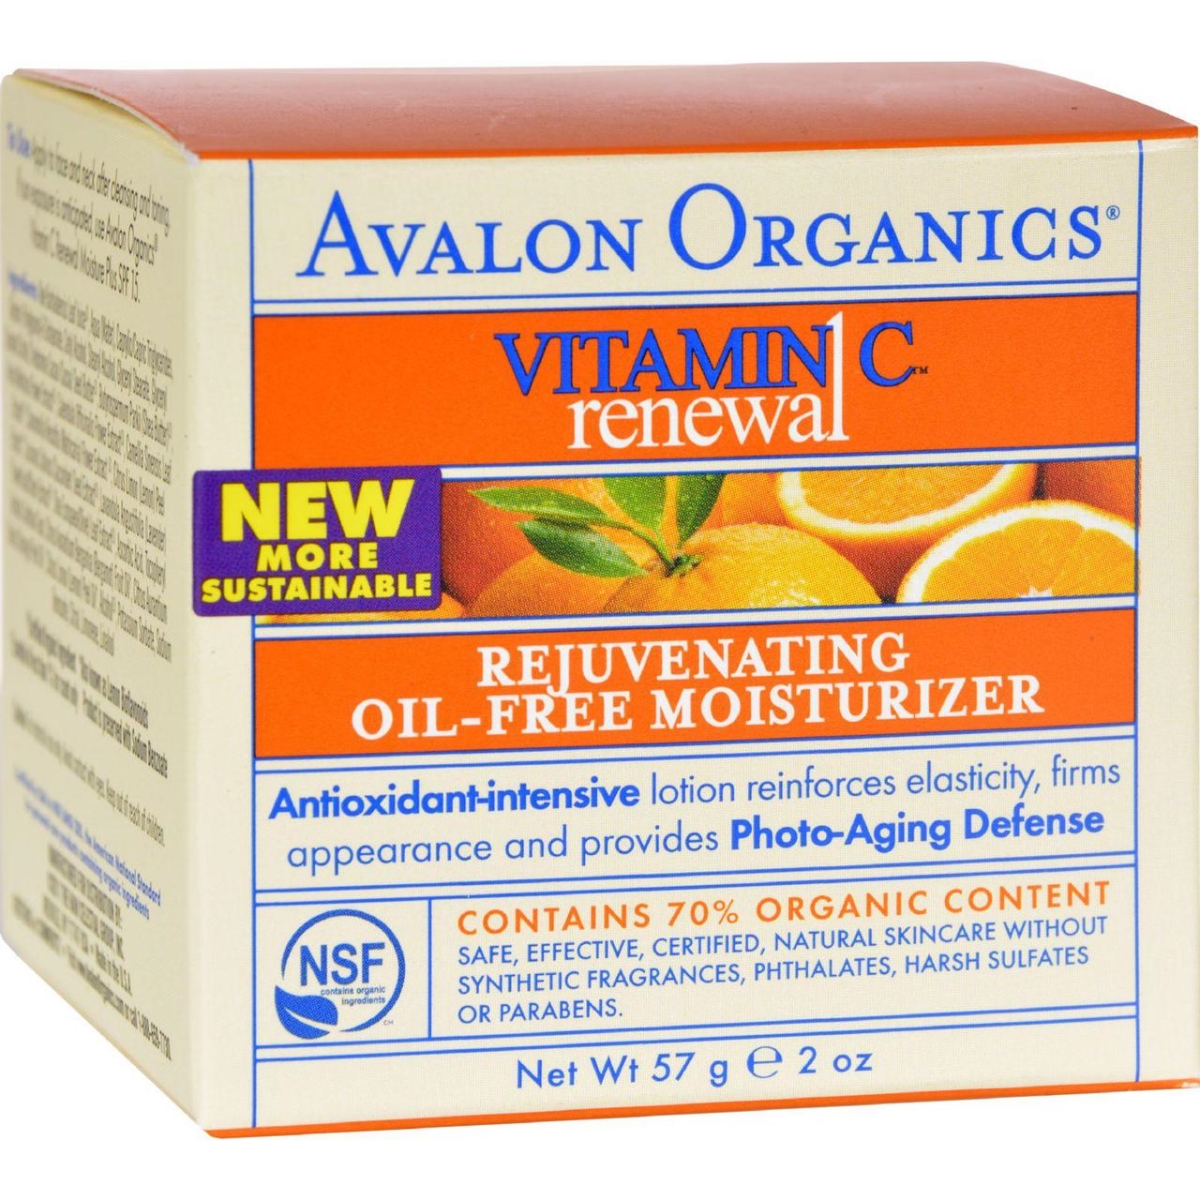 Hg0713164 2 Fl Oz Organics Rejuvenating Oil Free Moisturizer - Vitamin C